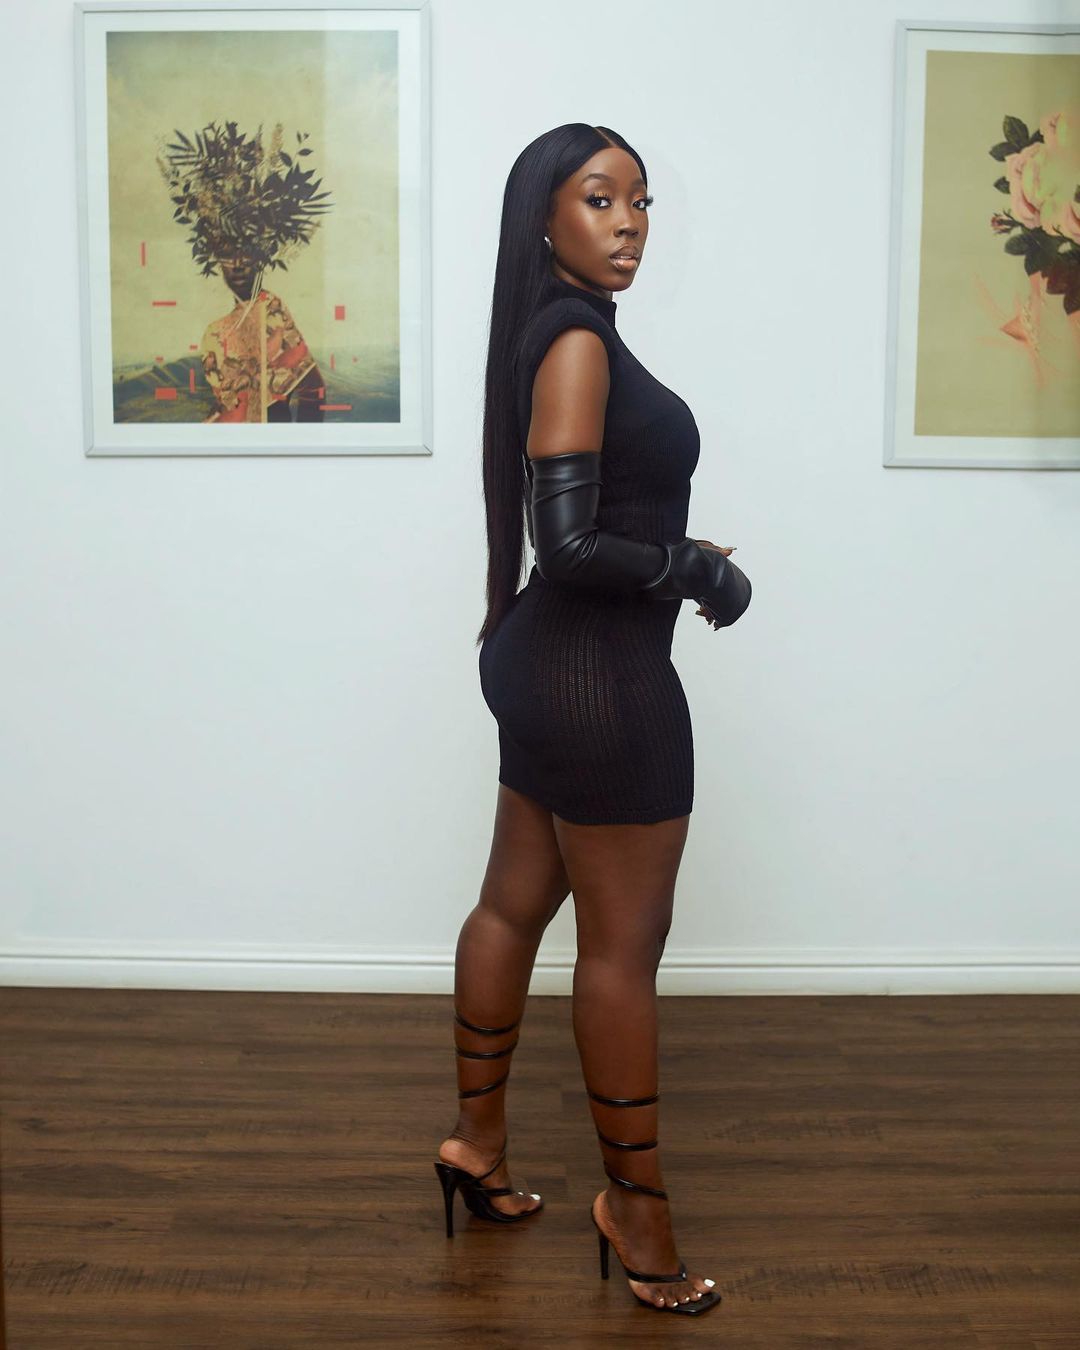 Beverly Naya: Fifty Shades of Black Beauty